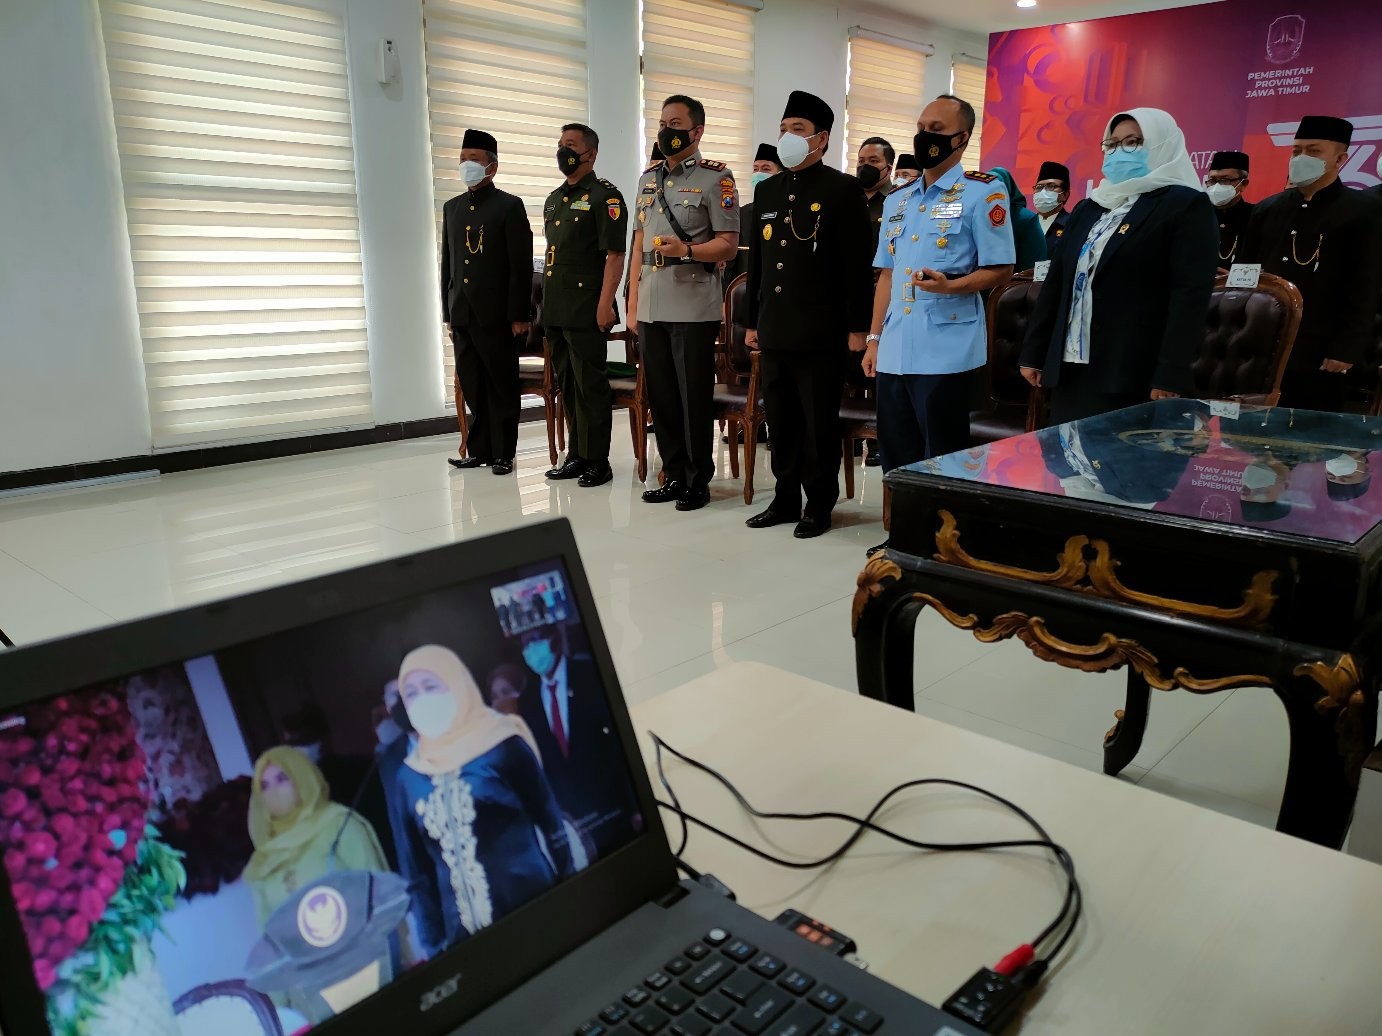 Wakil Bupati Sumrambah mengikuti upacara virtual dari Gedung Negara Grahadi Surabaya dalam rangka Hari Jadi Pemerintah Provinsi Jawa Timur ke 76, Rabu 13 Oktober 2021 dari ruang Media Center Pemkab Jombang. (Foto: Istimewa)